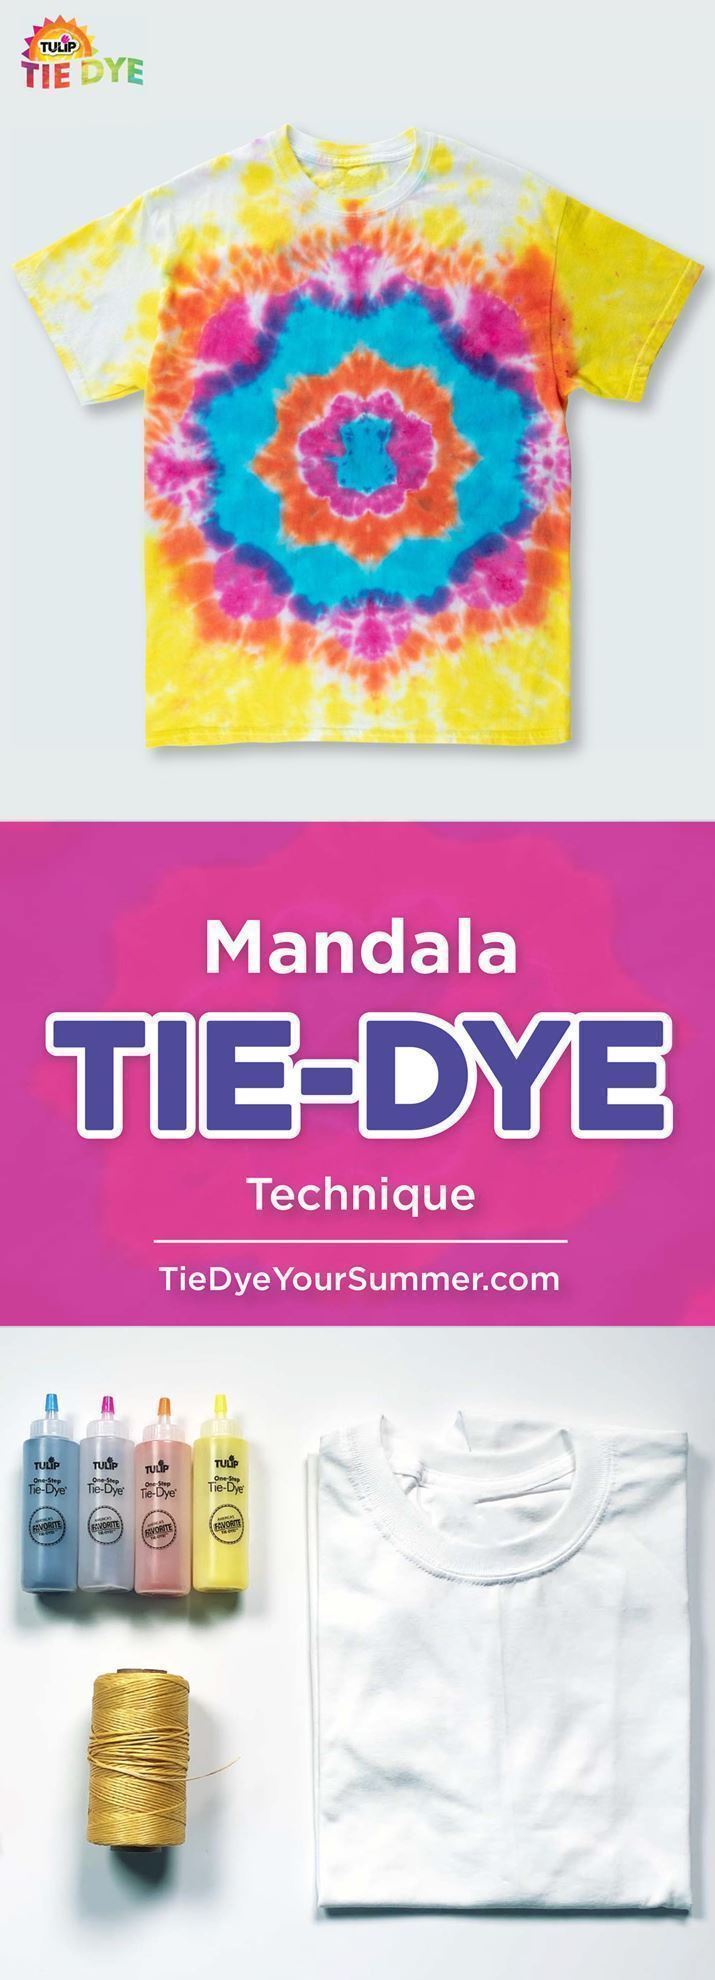 Mandala Tie-Dye Technique